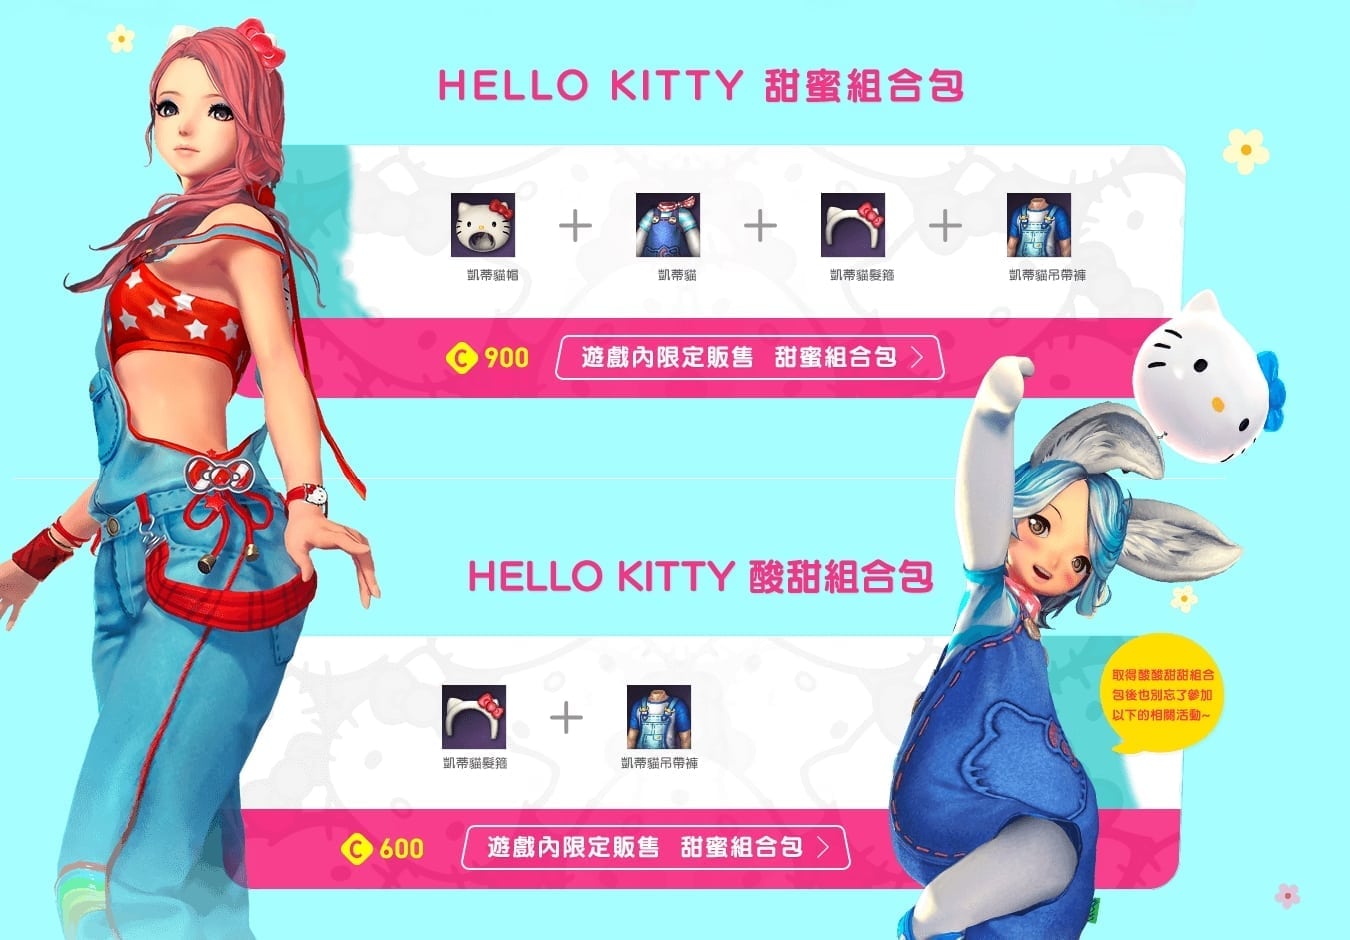 Blade & Soul Taiwan - Hello Kitty event